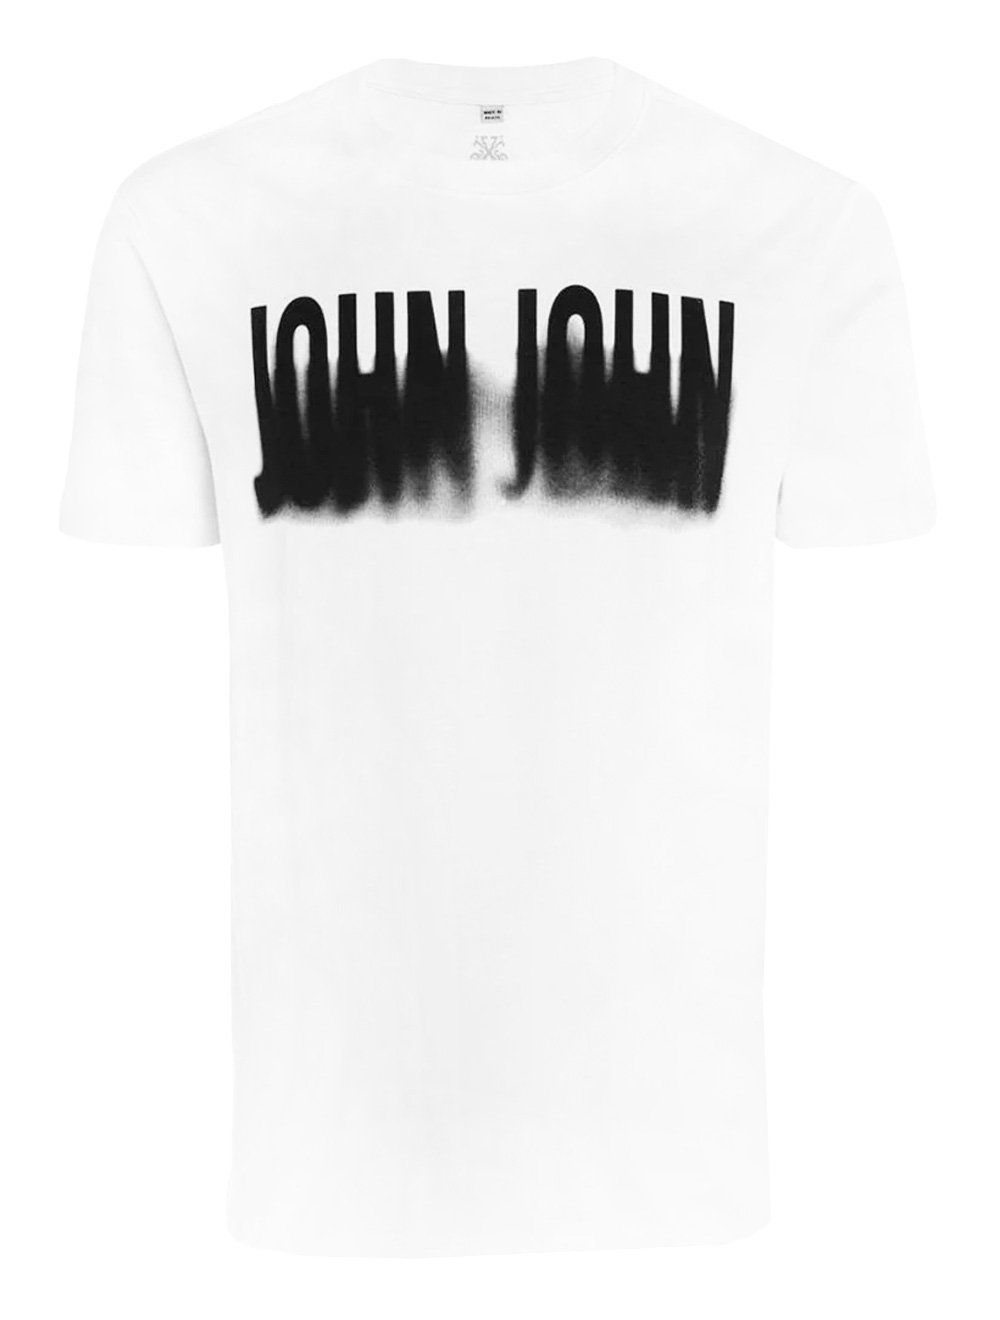 Camiseta John John Logo Preta - Corre Que Ta Baratinho